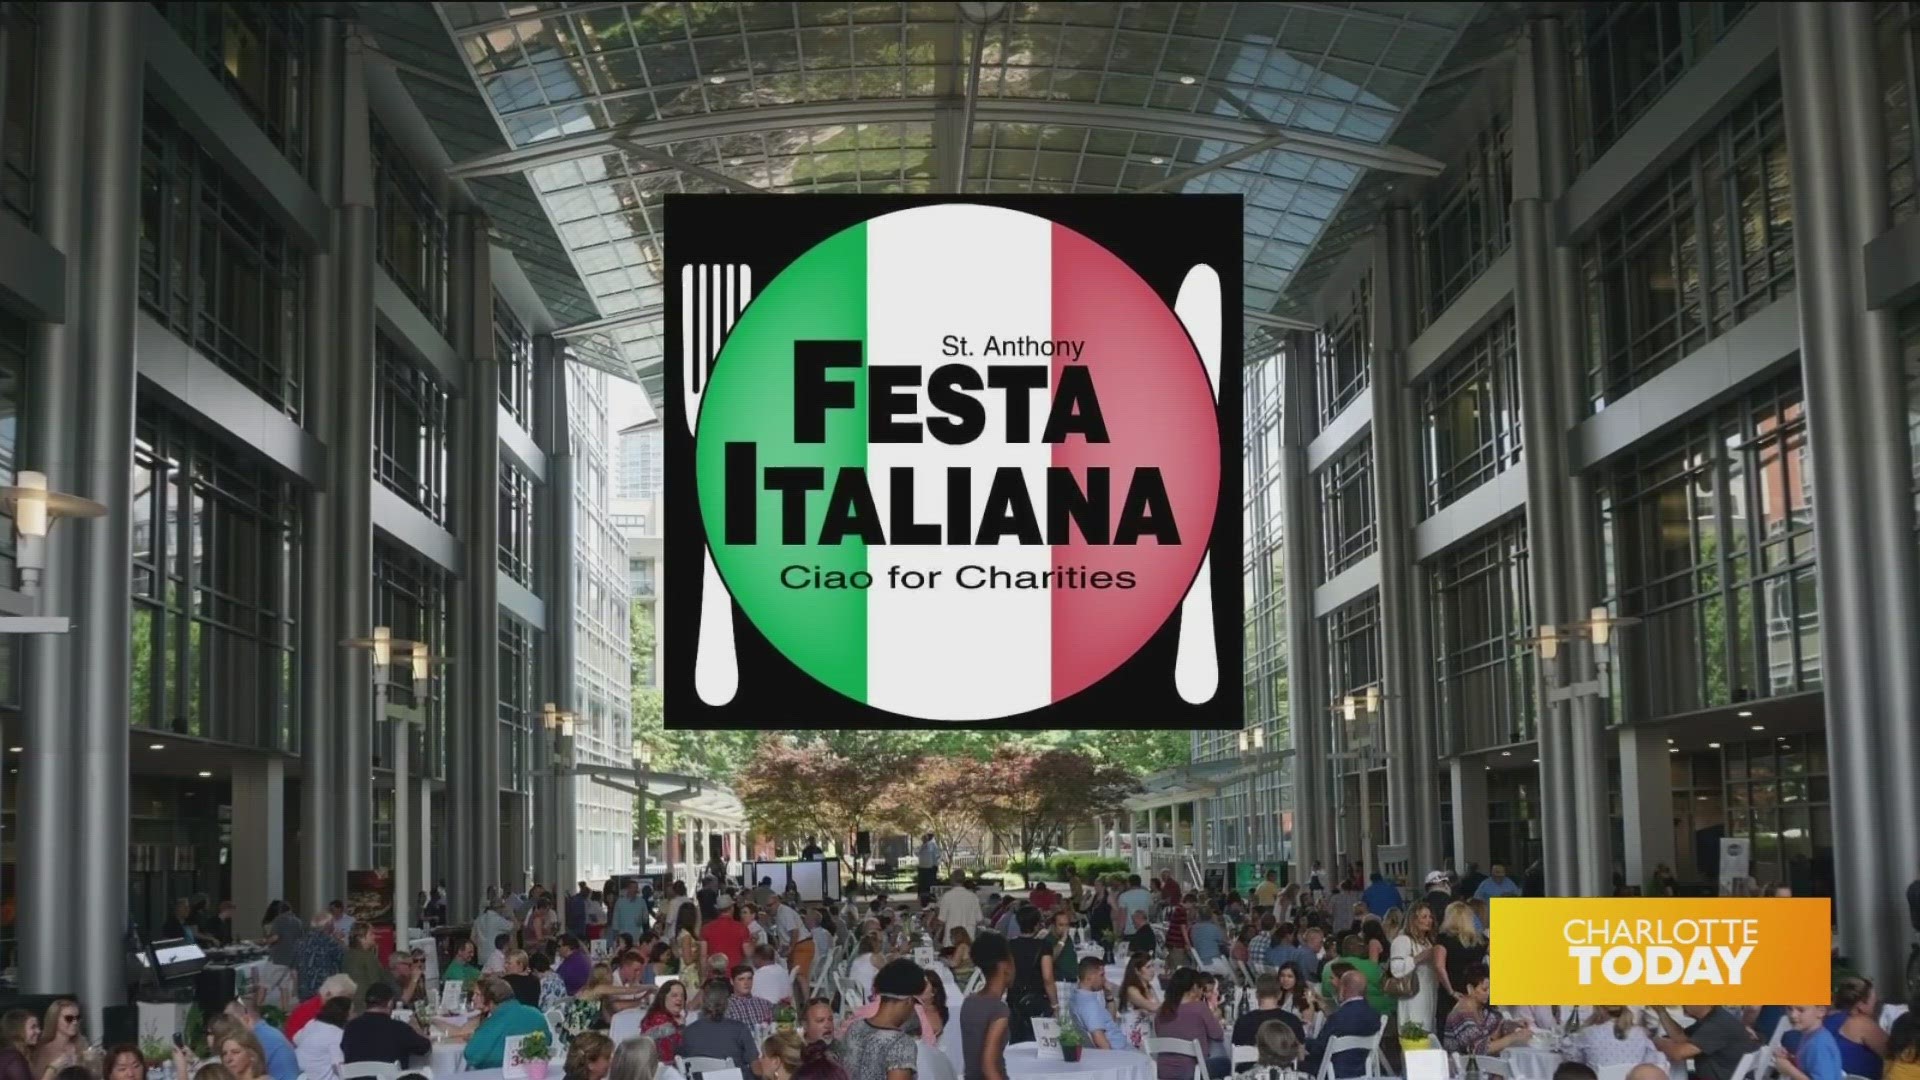 Get ready for the 18th Annual, Festa Italiana Charlotte